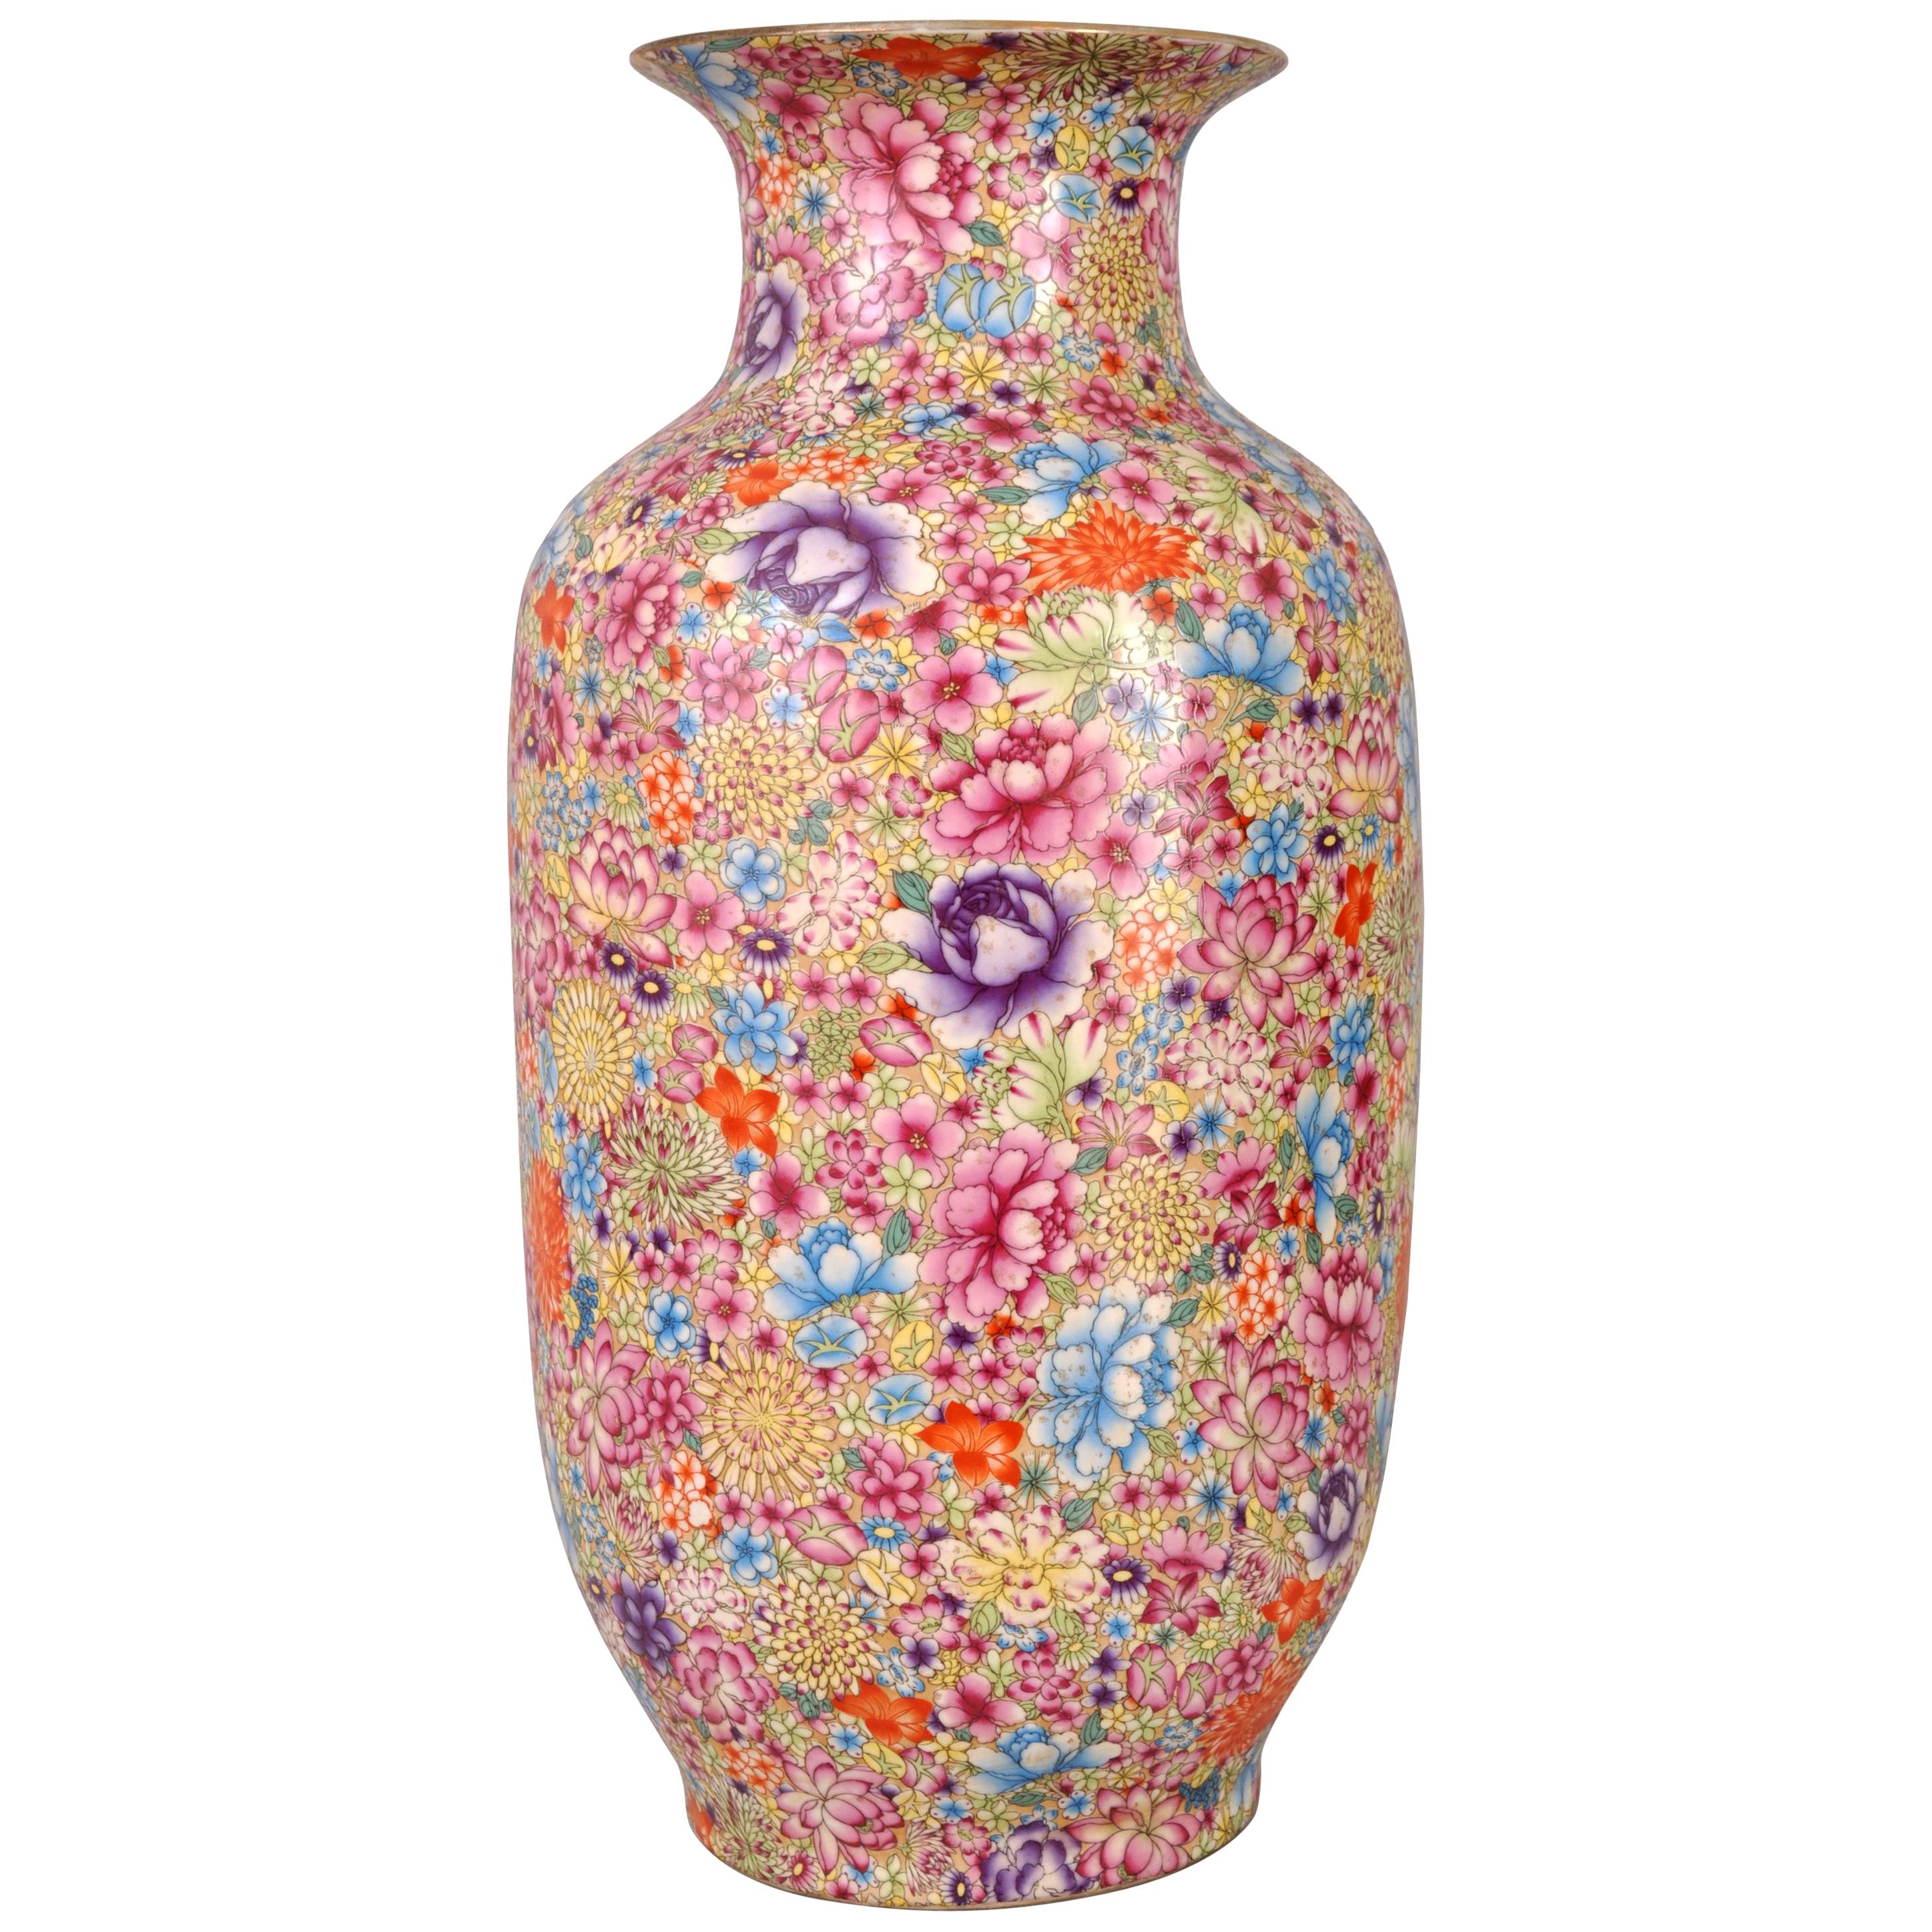 Monumental Antique Chinese Porcelain Qing Dynasty Thousand Flowers Vase, 1900